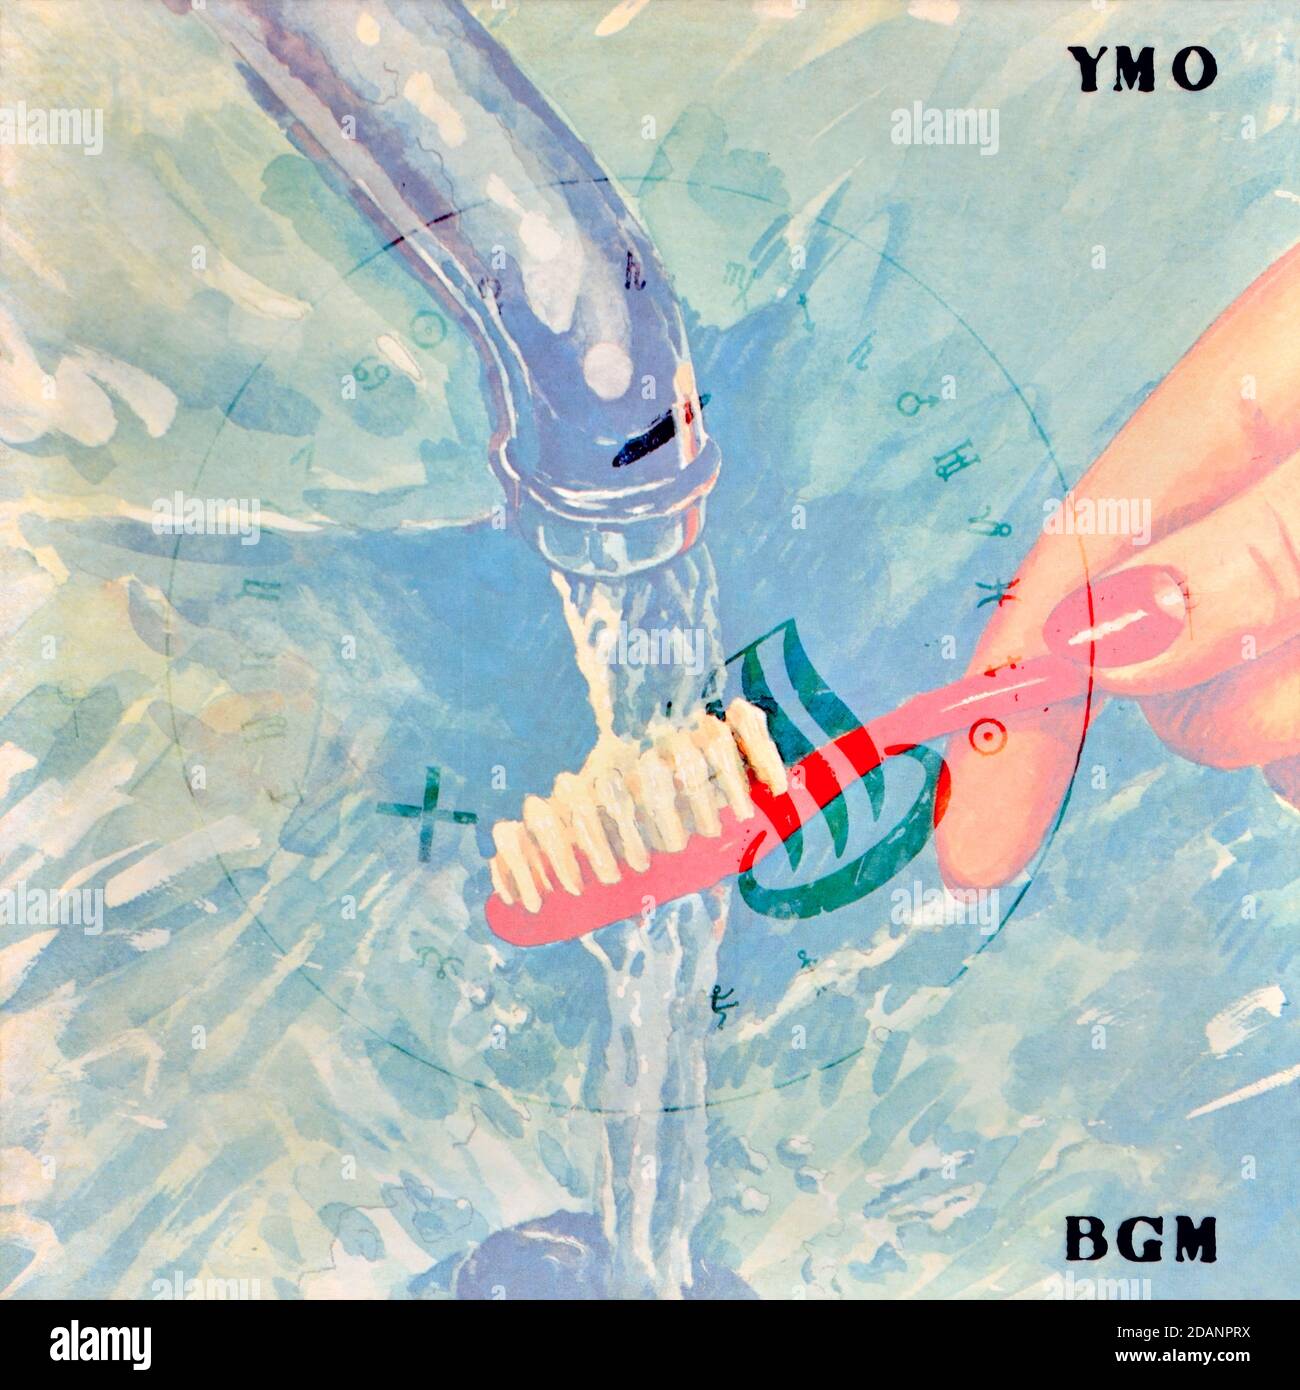 YMO - original Vinyl Album Cover - BGM - 1981 Stockfoto